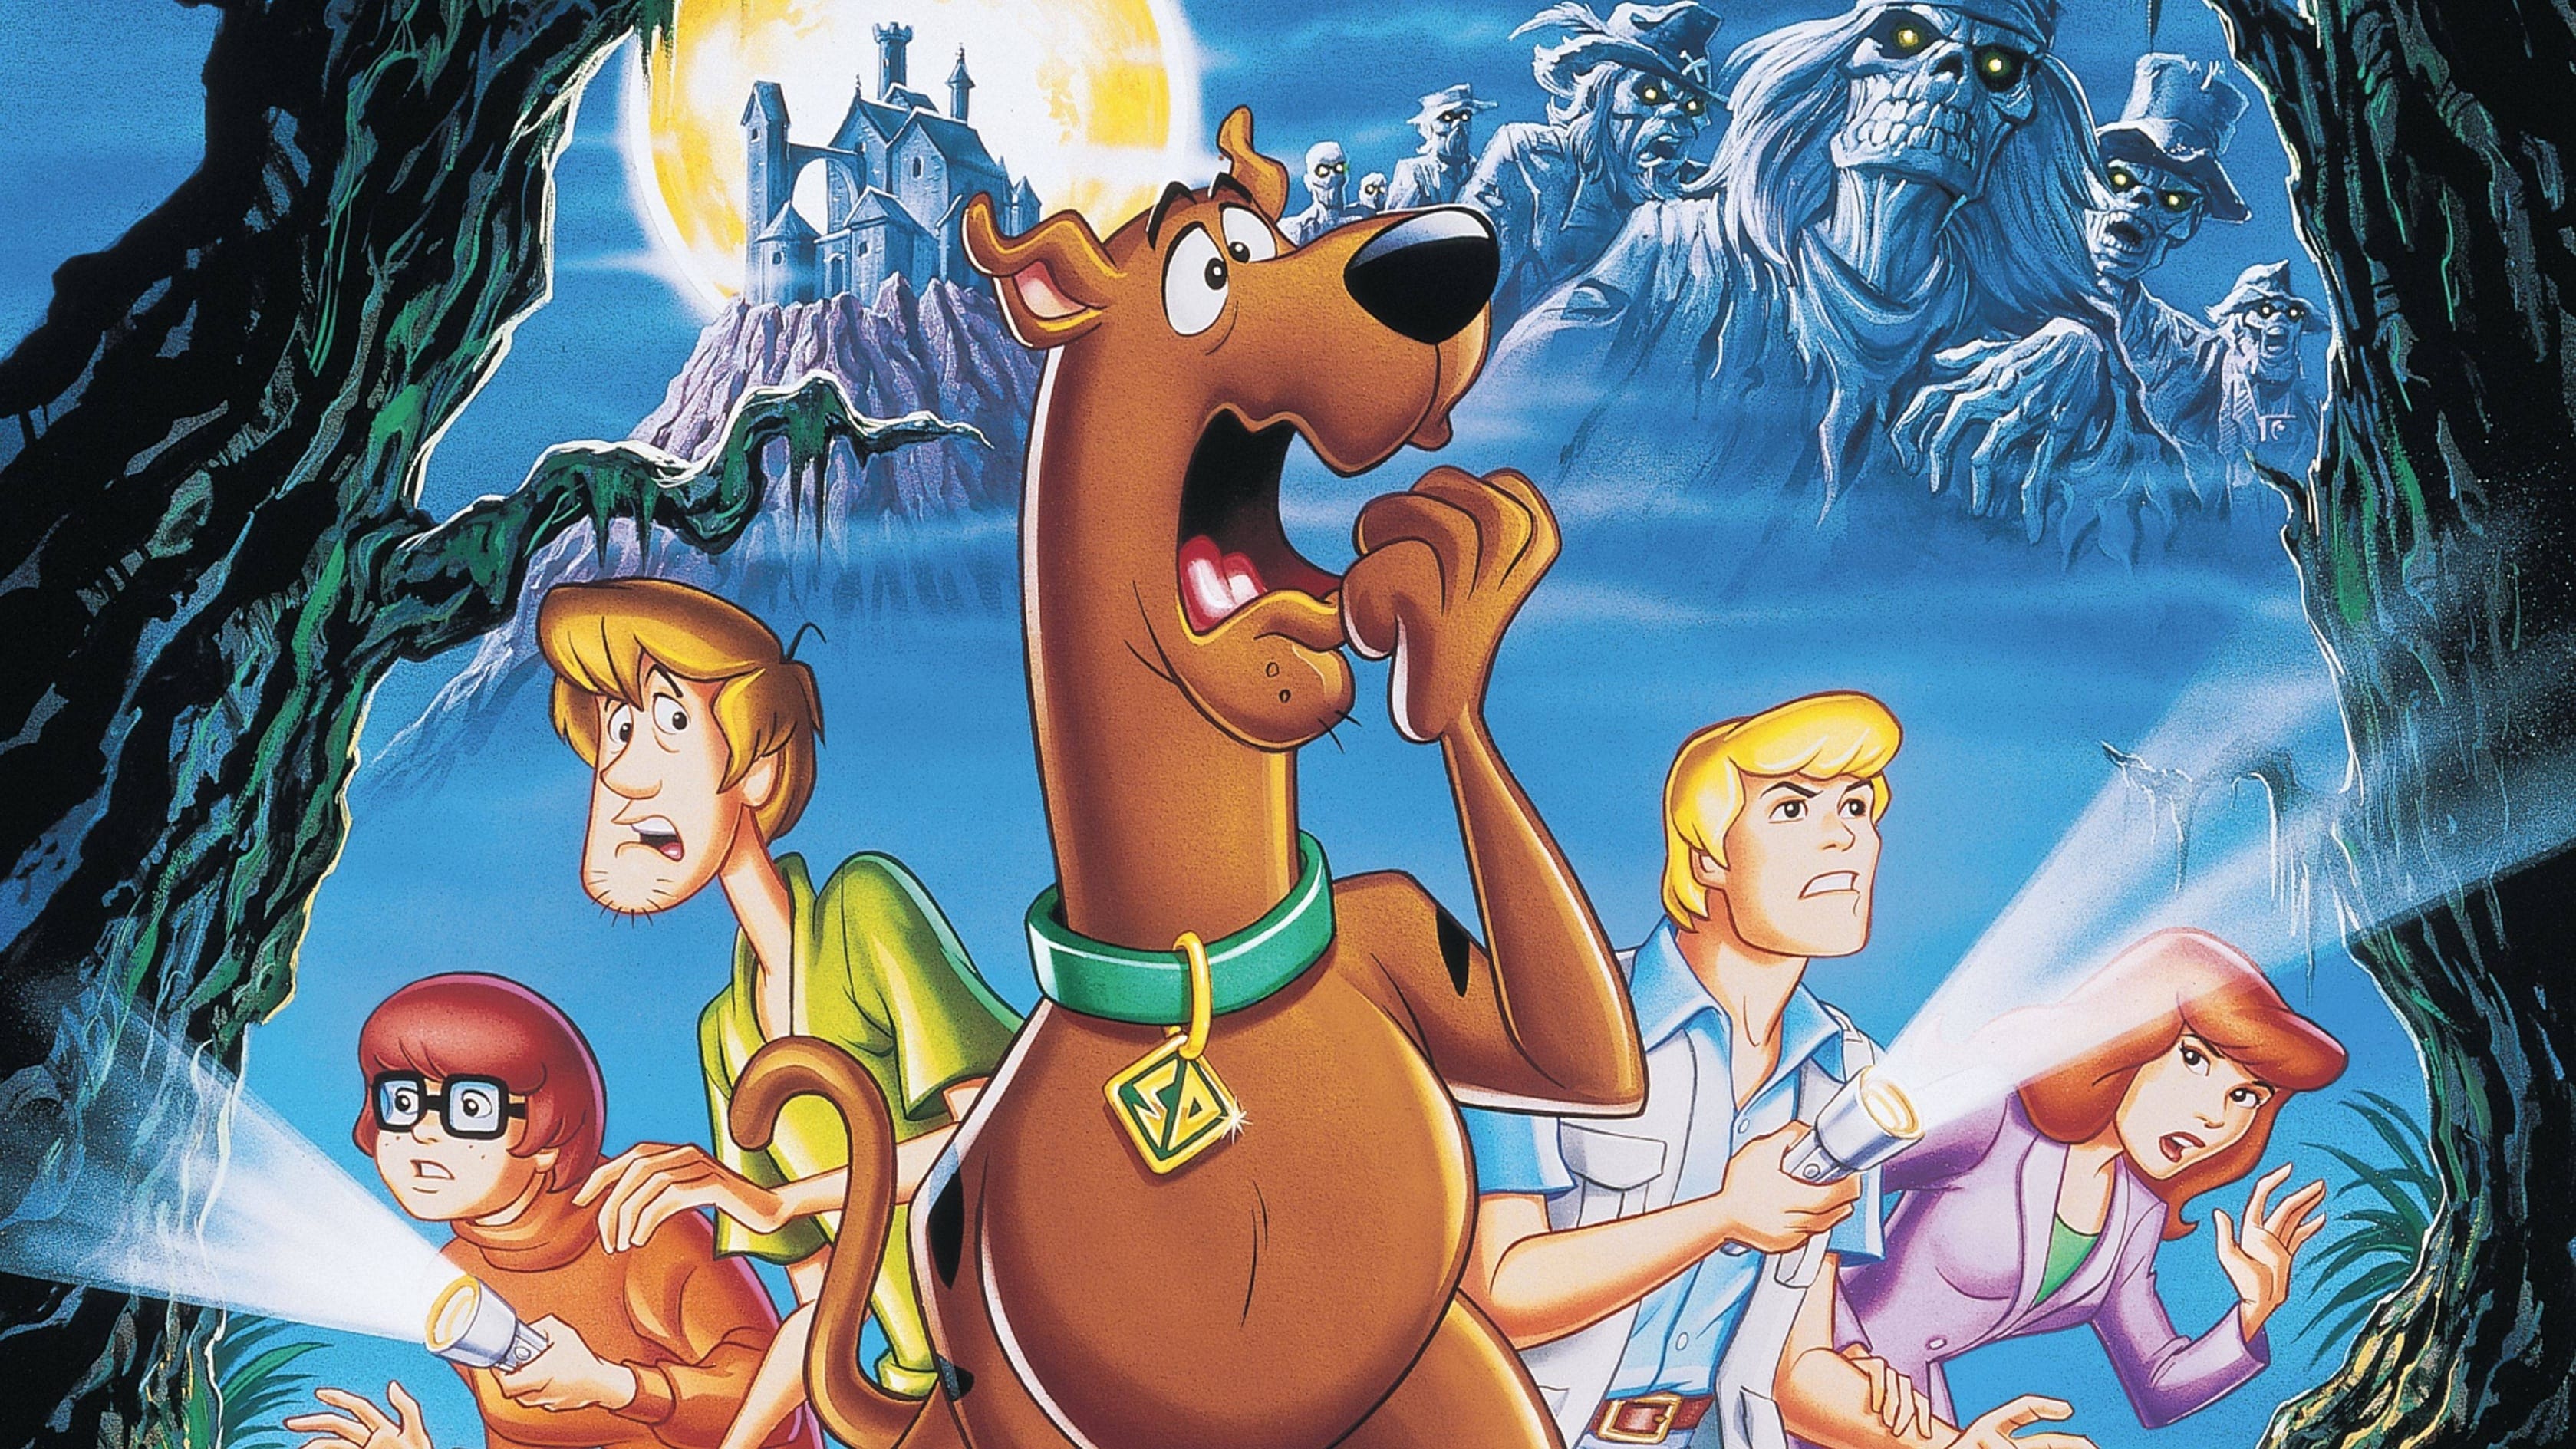 Scooby-doo na Ilha dos Zumbis